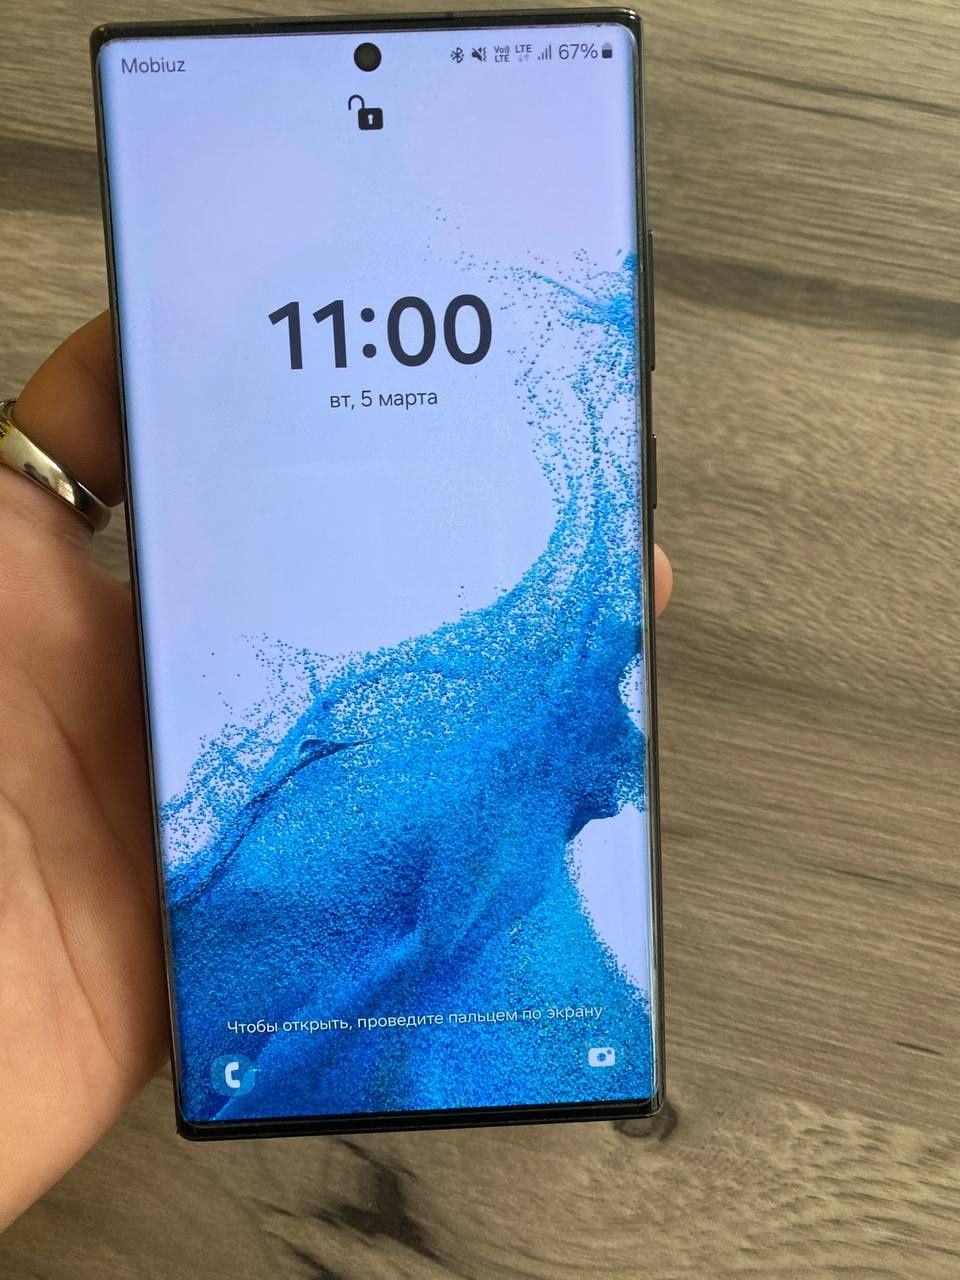 Samsung S 22 ultra